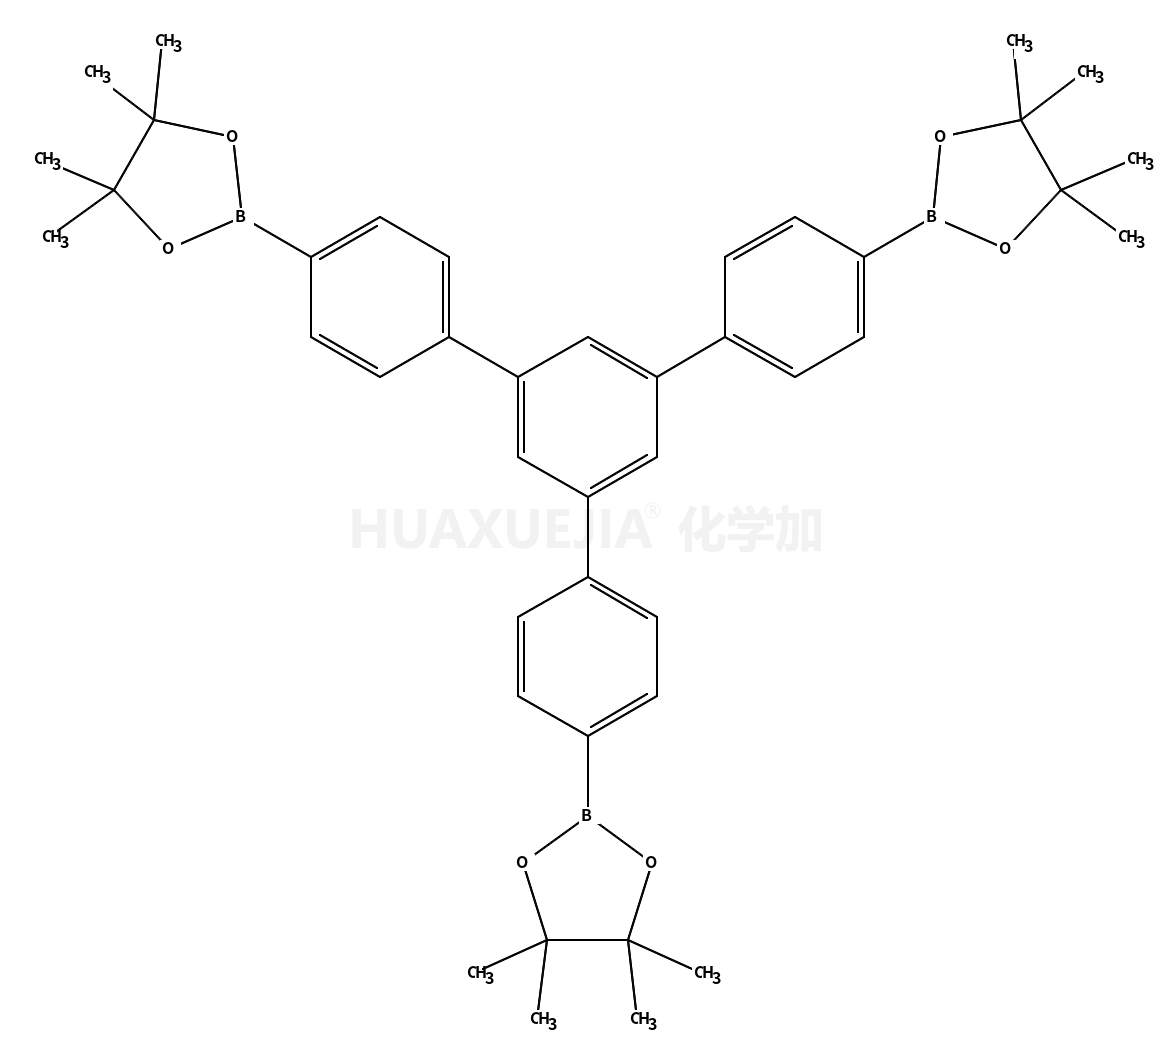 2-[4-[3,5-bis[4-(4,4,5,5-tetramethyl-1,3,2-dioxaborolan-2-yl)
phenyl]phenyl]phenyl]-4,4,5,5-tetramethyl-1,3,2-dioxaborolane